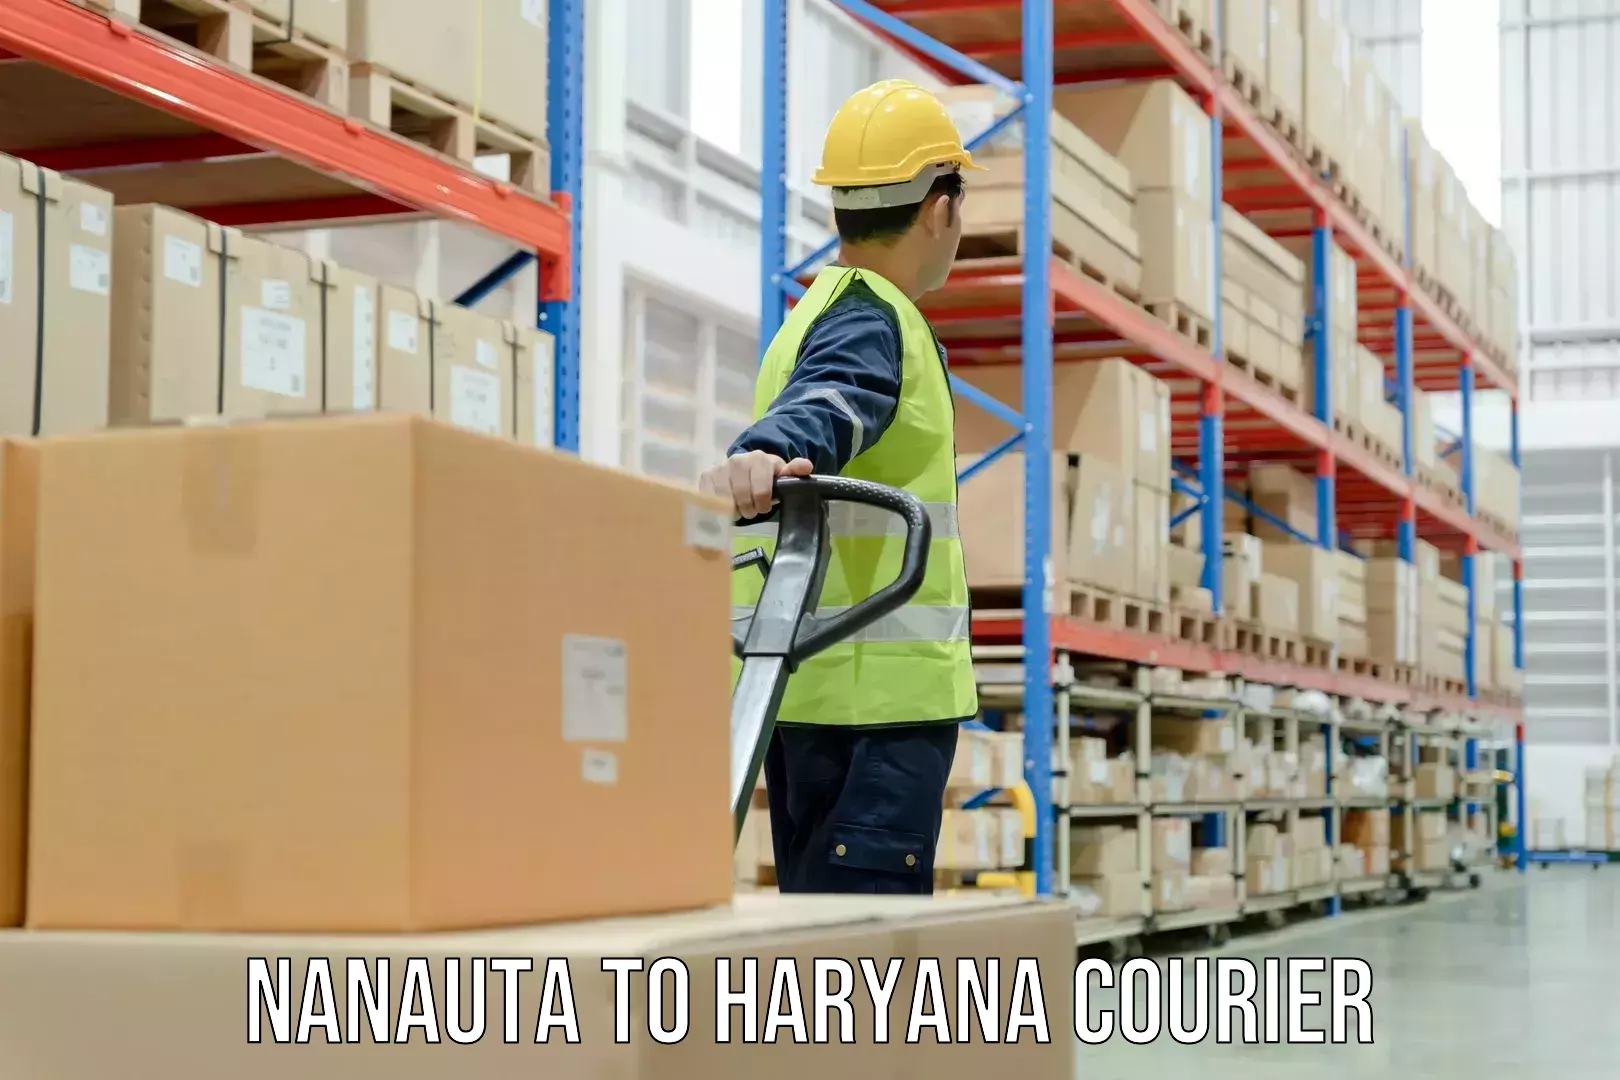 Courier app Nanauta to Haryana